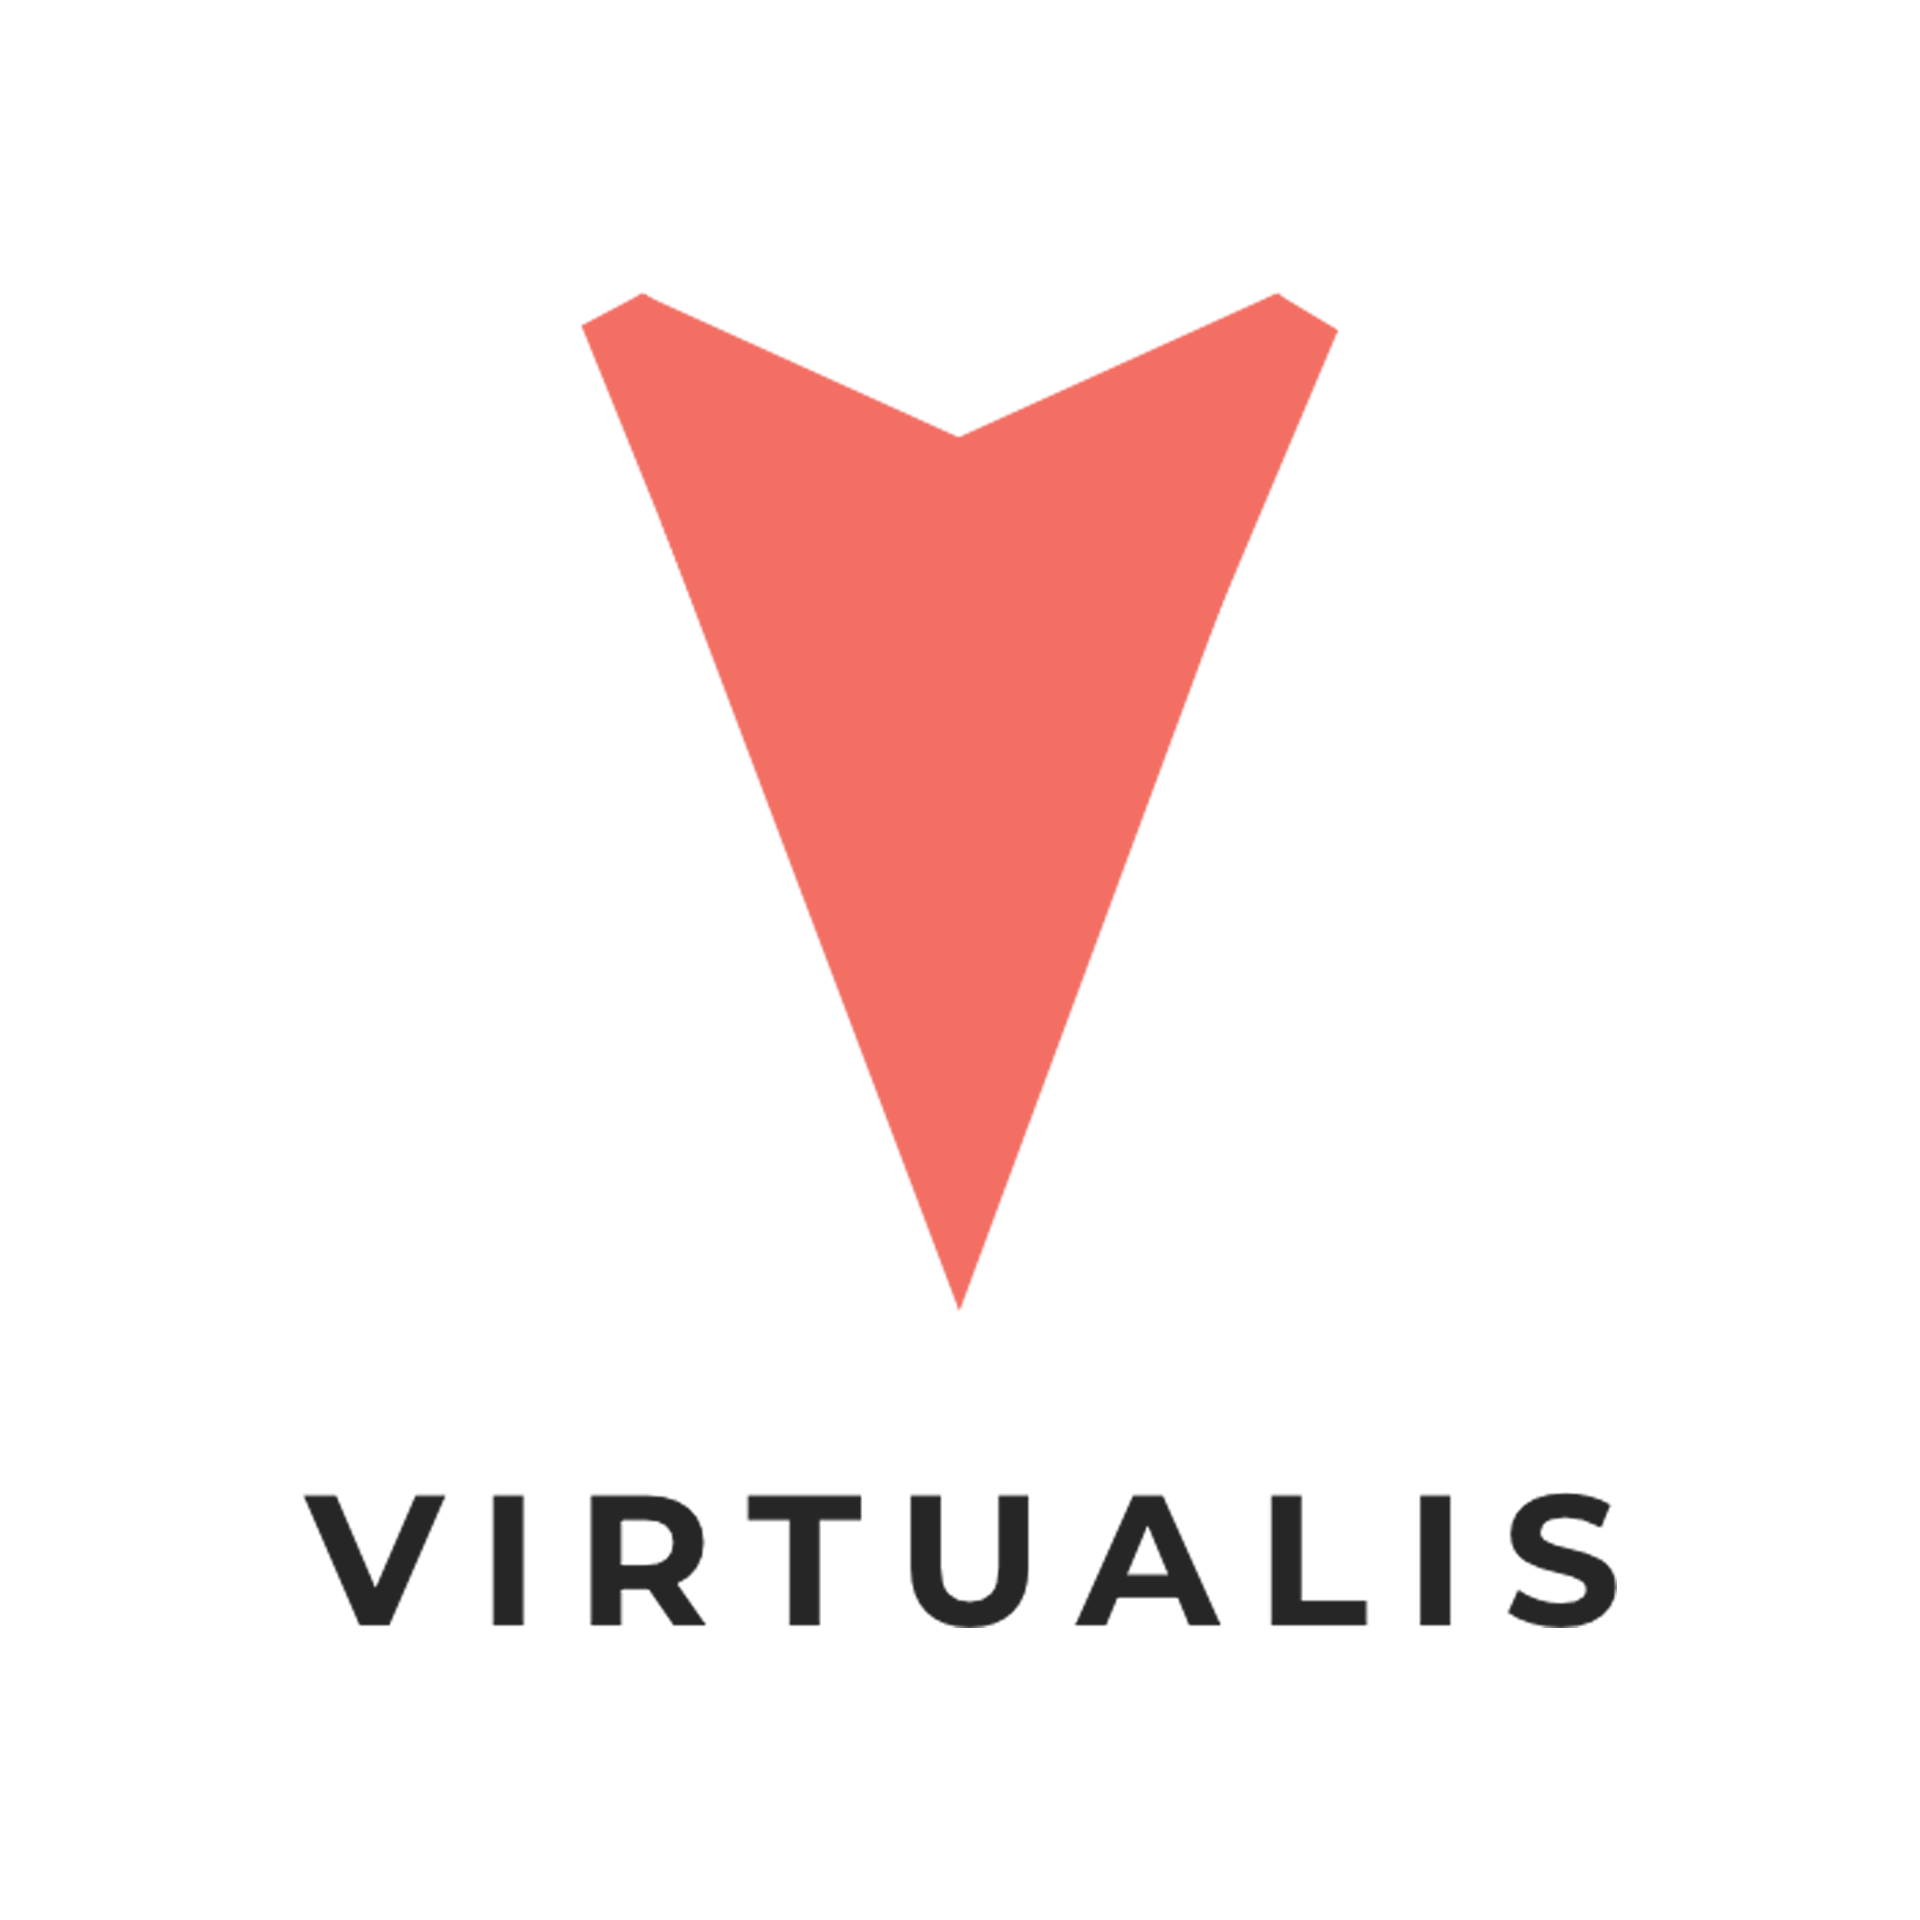 Virtualis Group